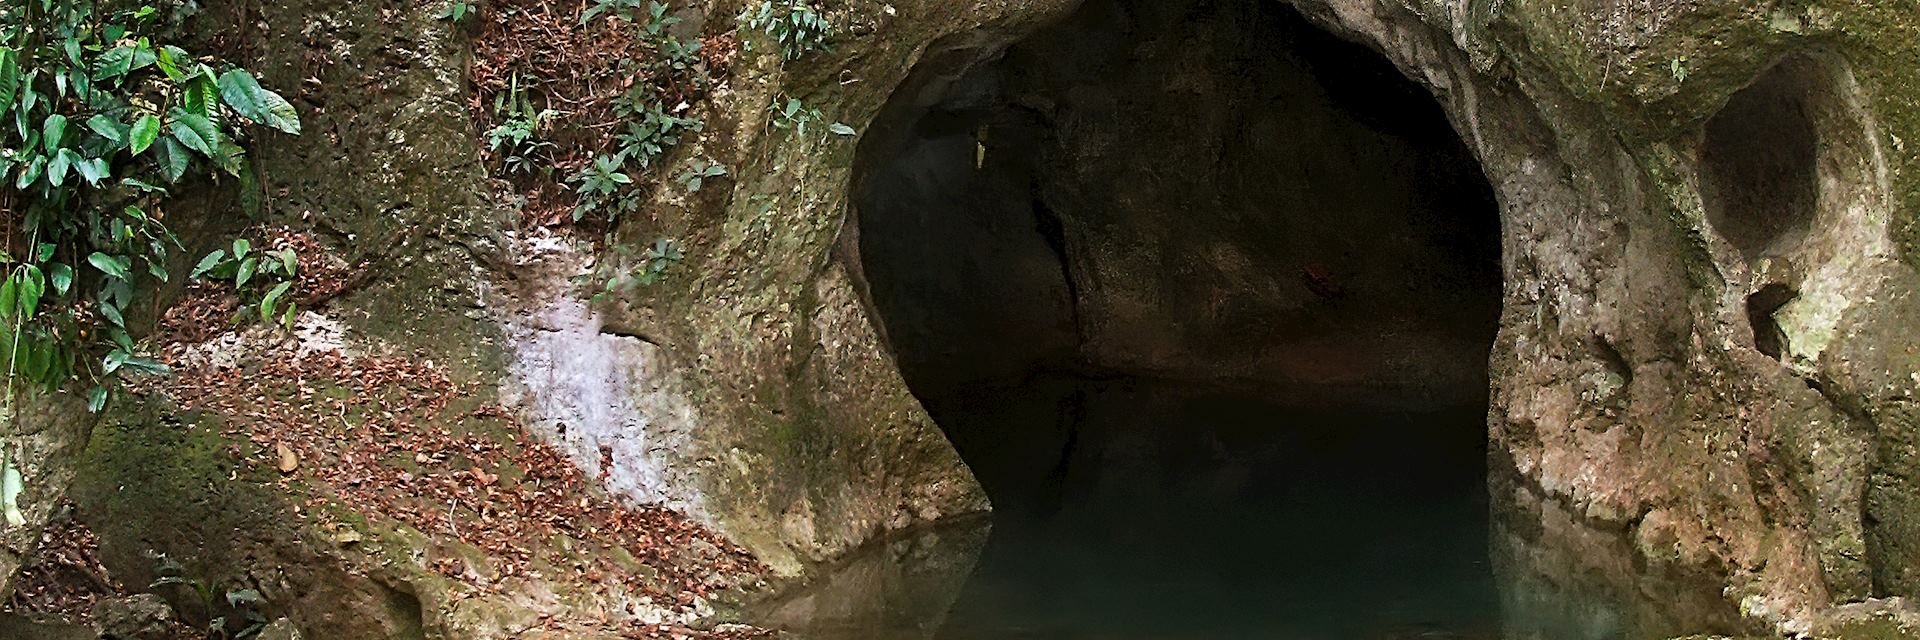 Actun Tunichil Muknal Cave